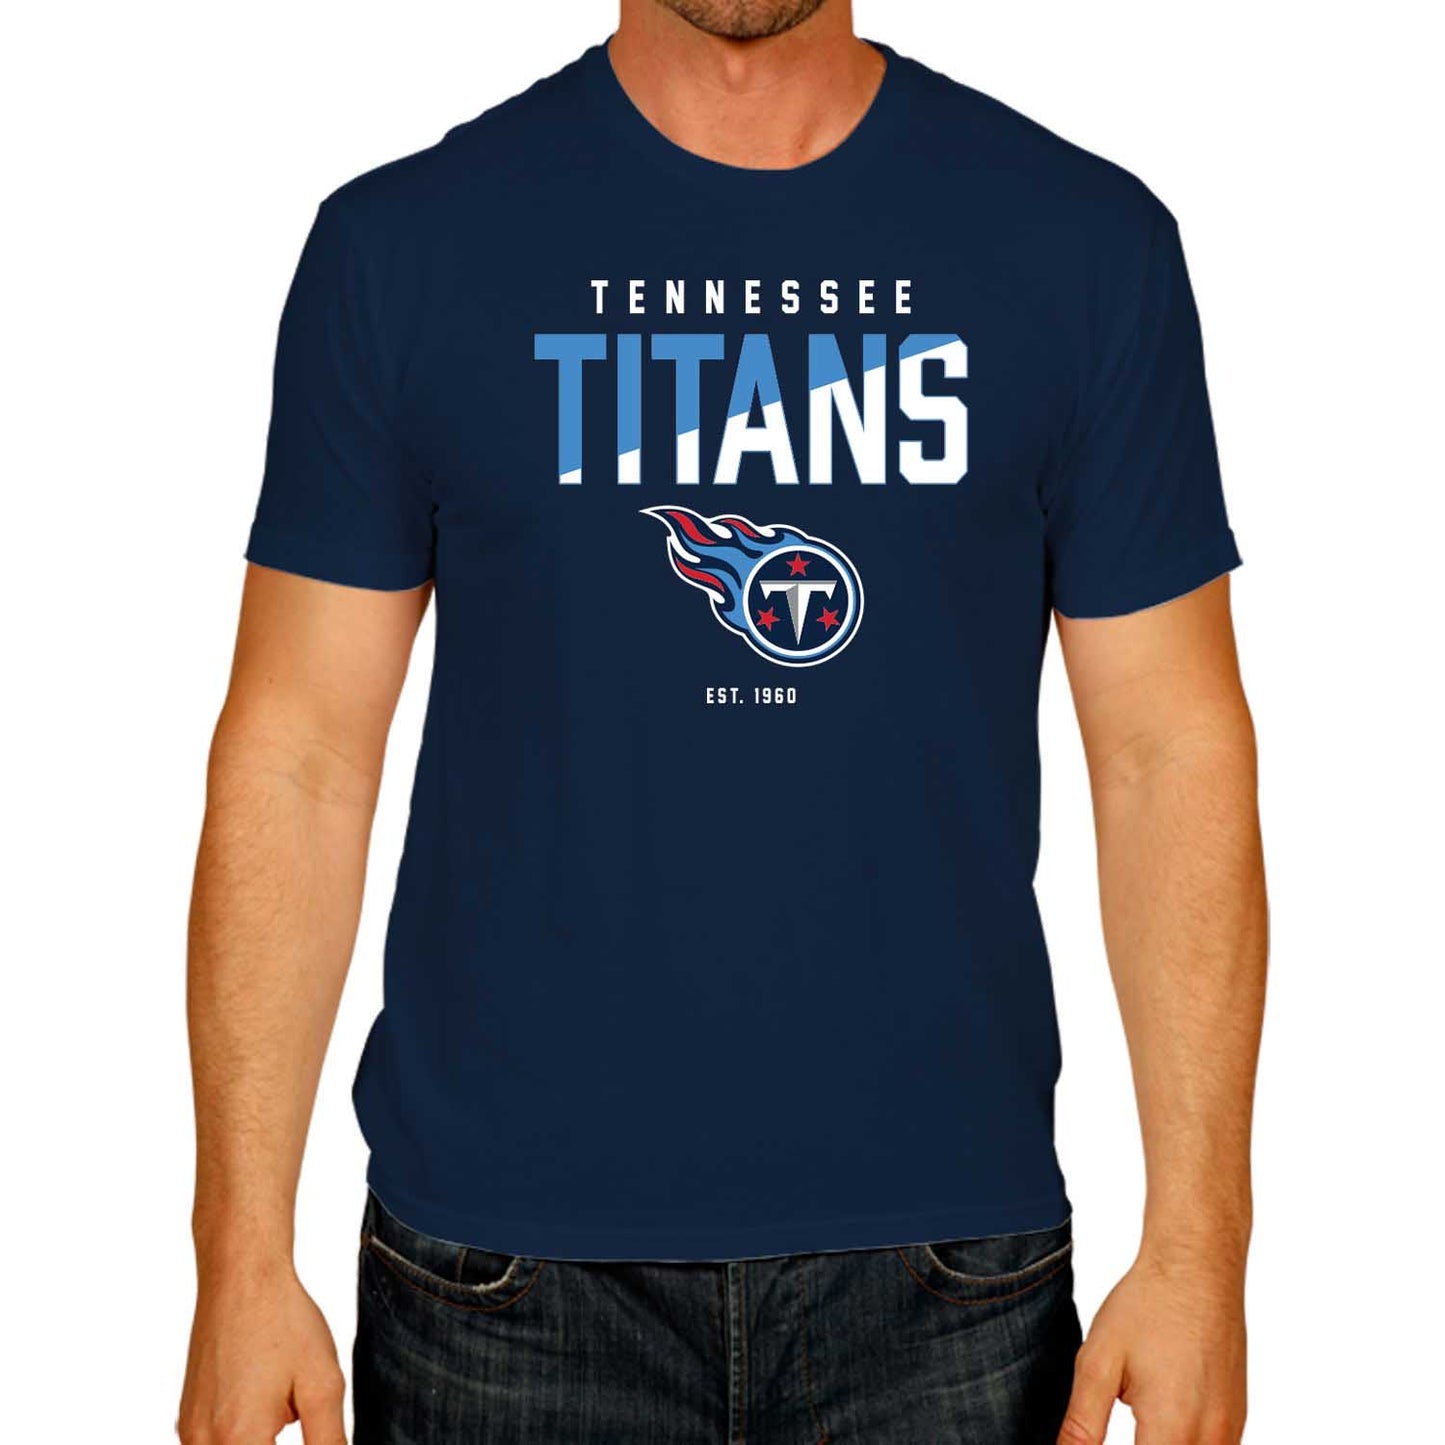 Tennessee Titans Adult NFL Diagonal Fade Color Block T-Shirt - Navy